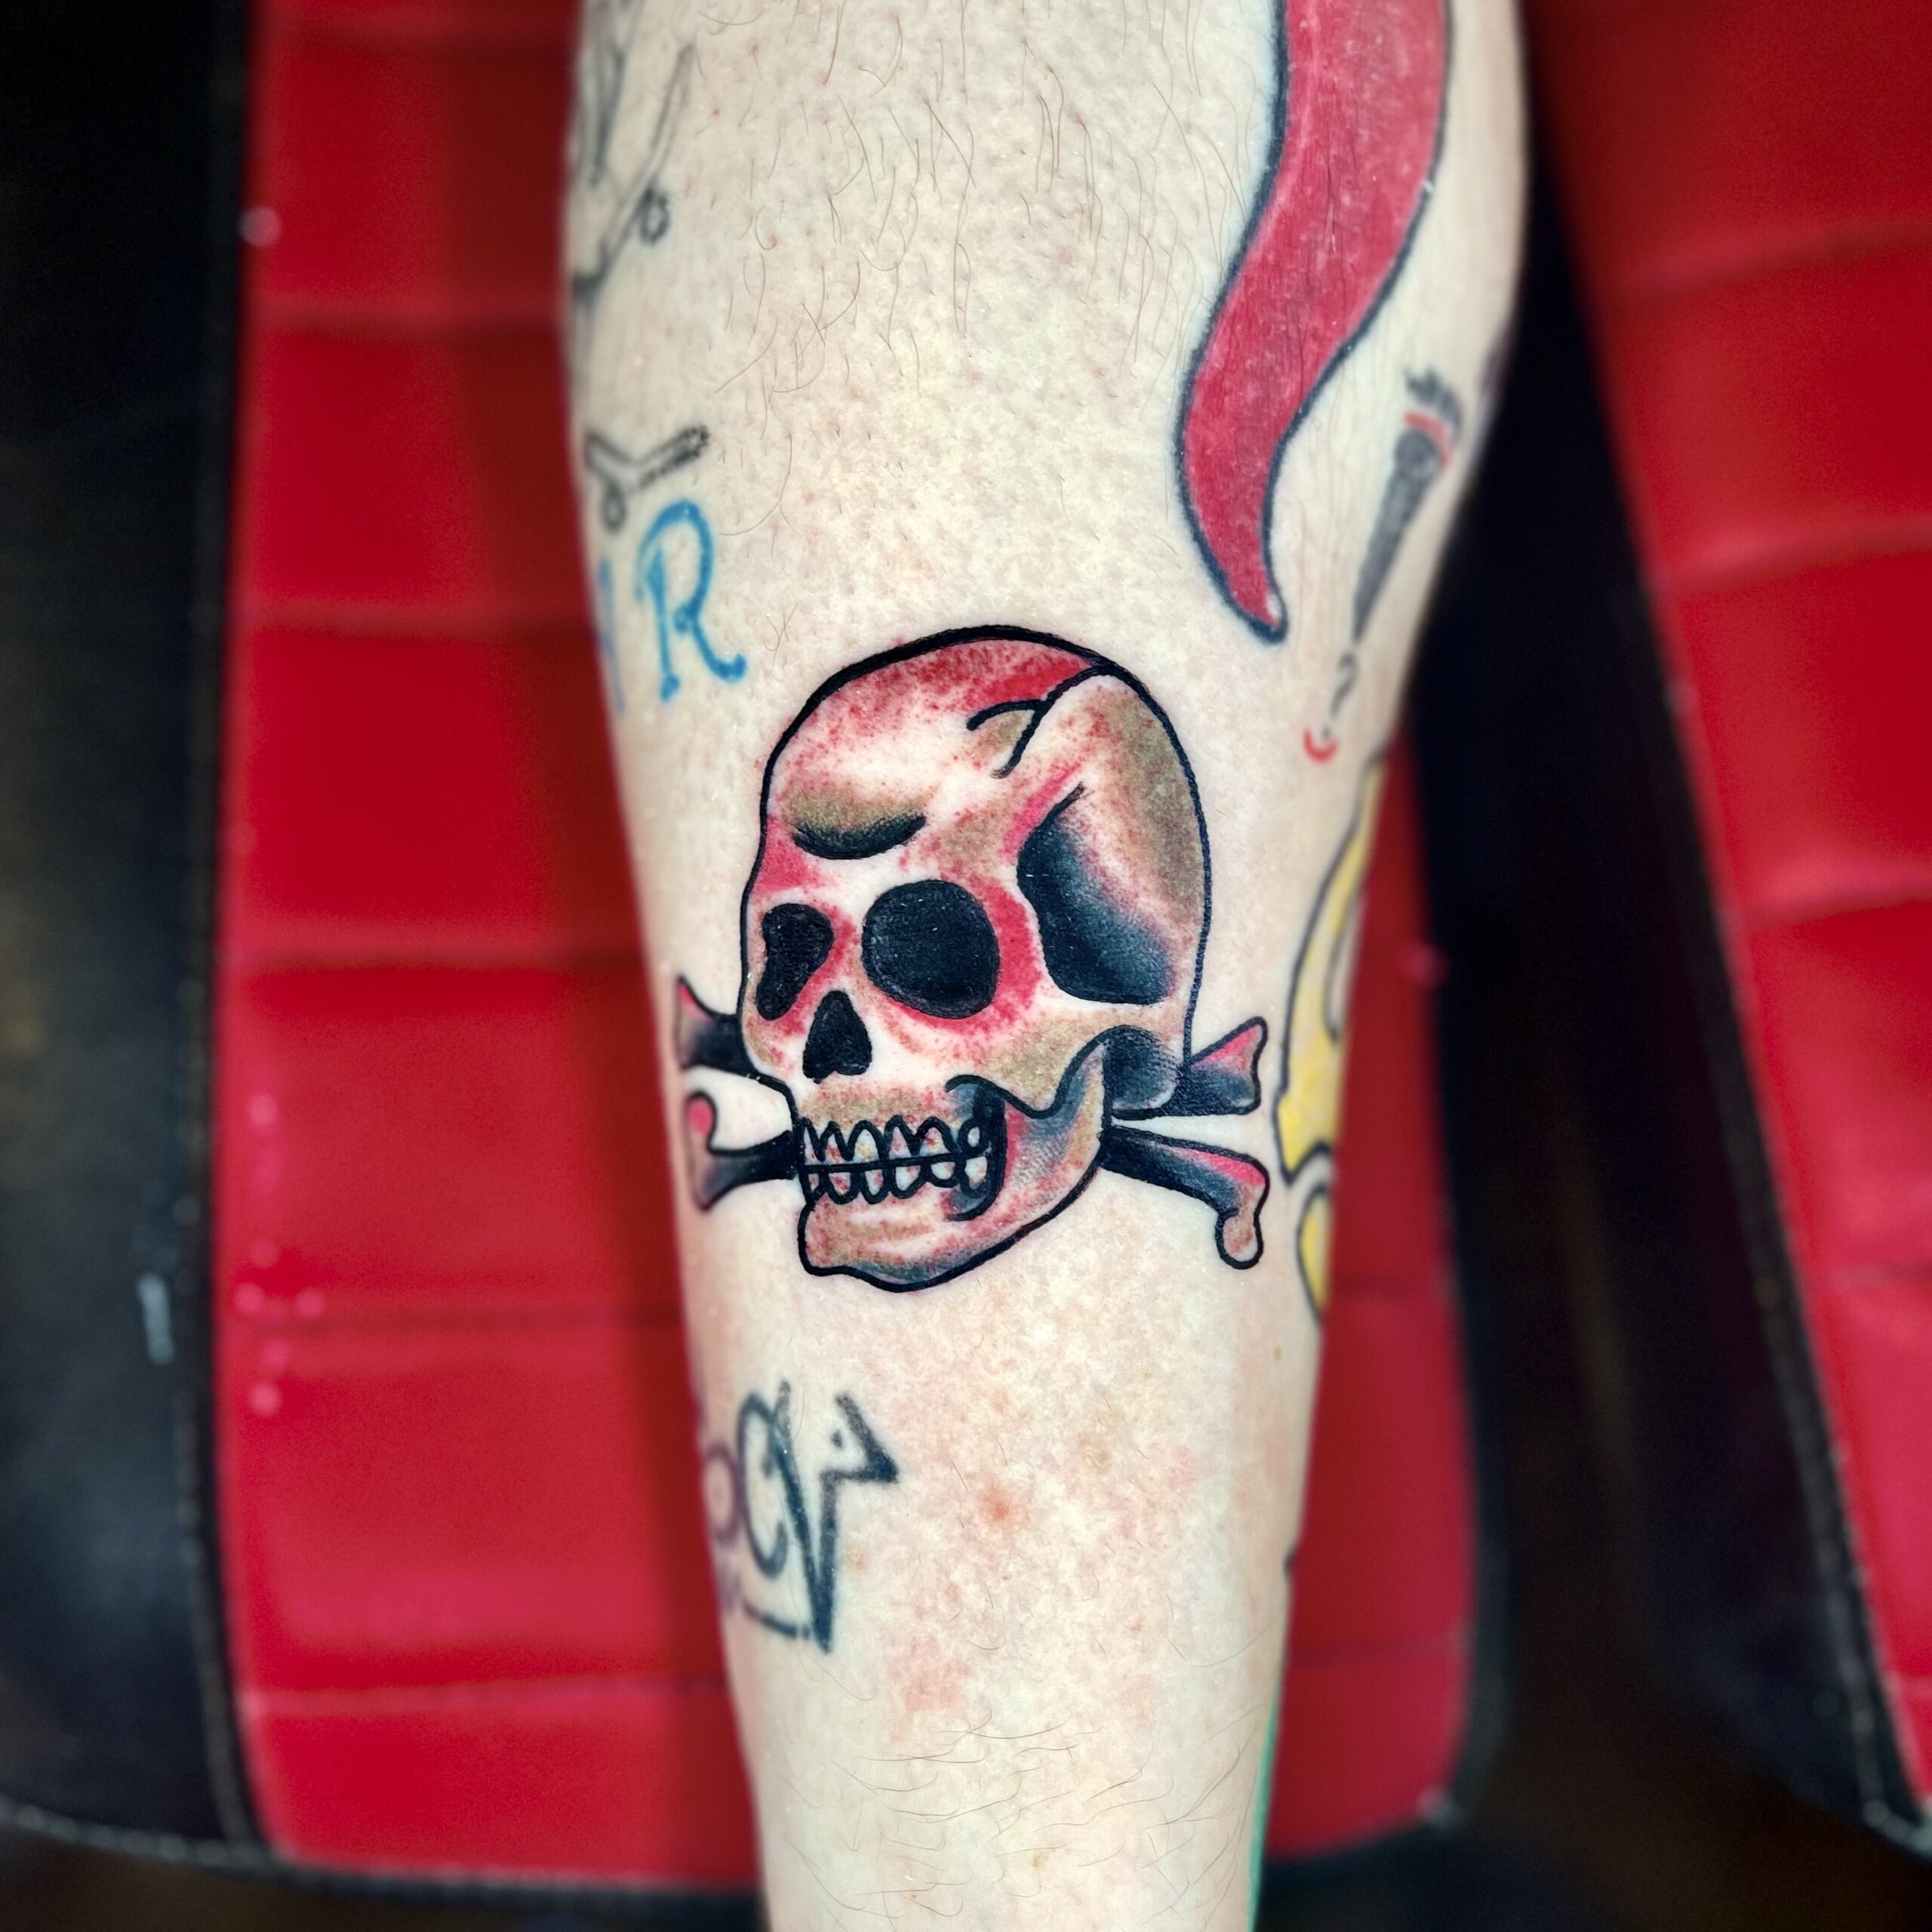 Tattoo of a skull and crossbones